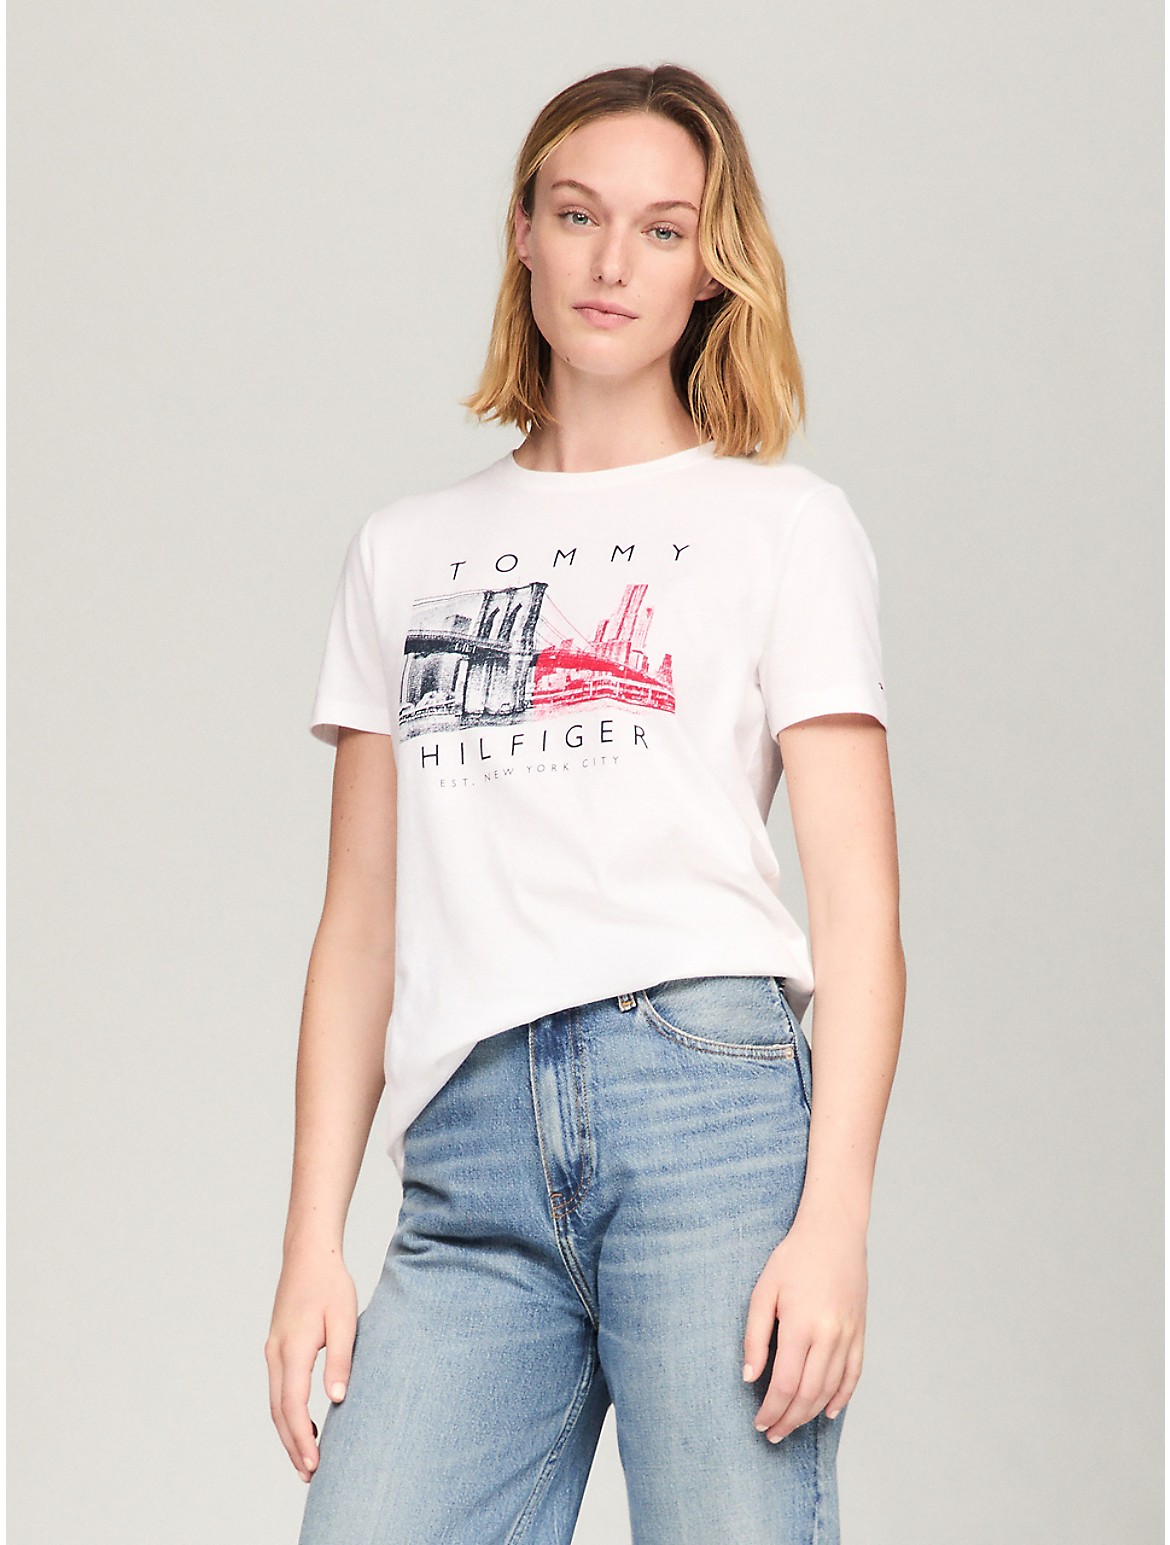 Tommy Hilfiger Women's Tommy Bridge Graphic T-Shirt